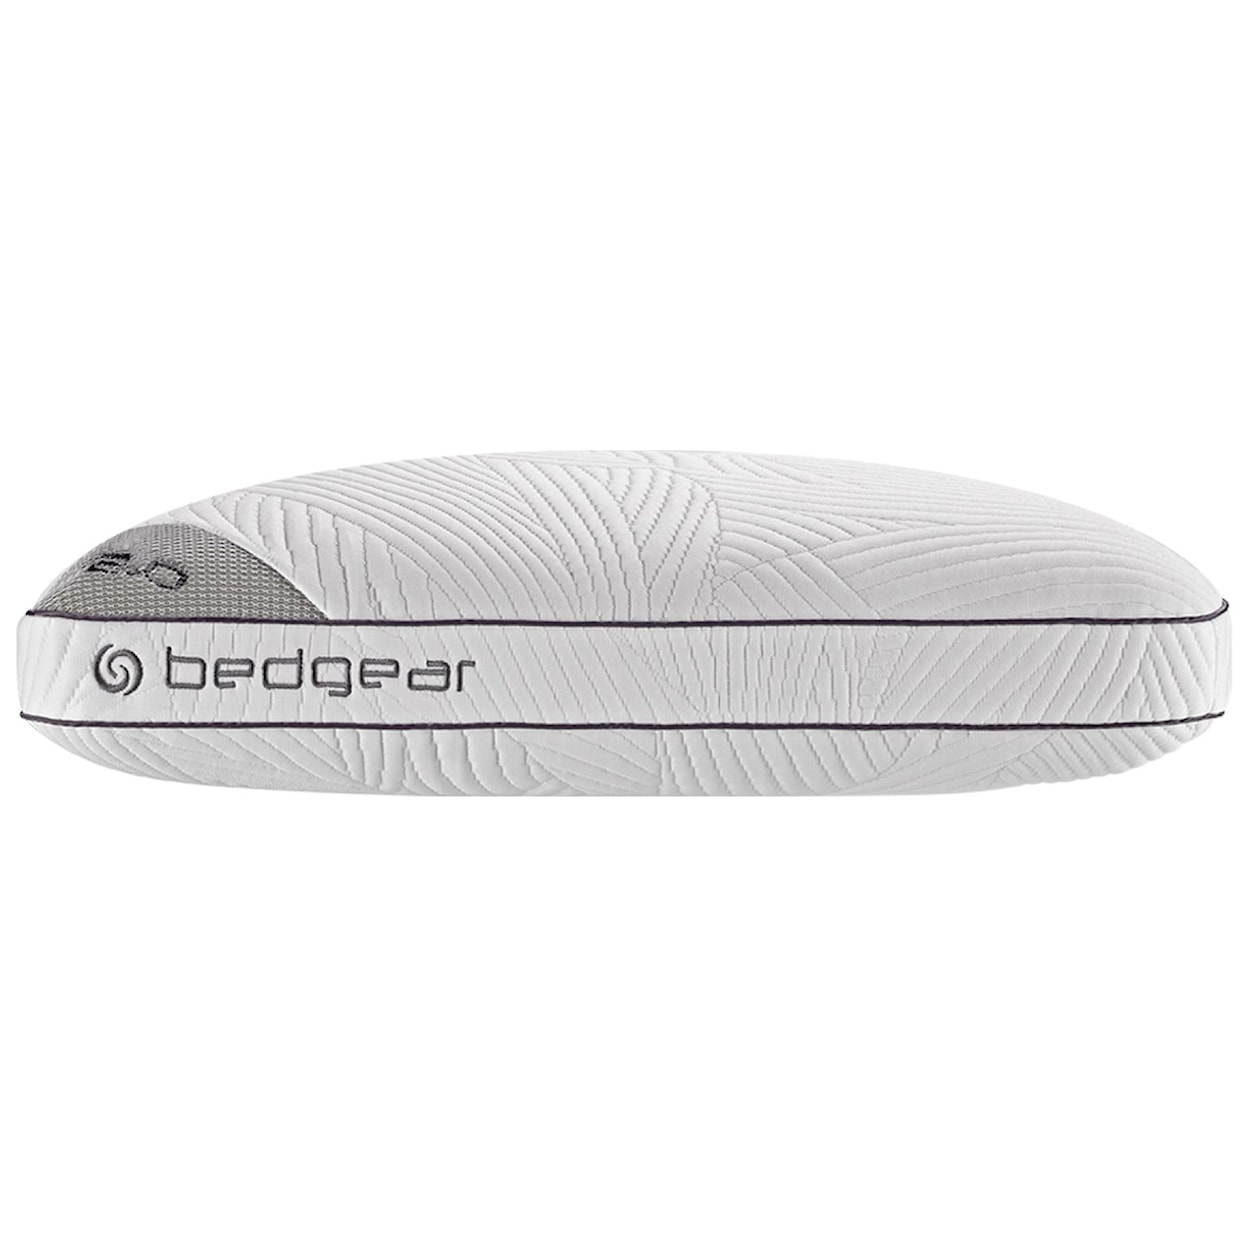 Bedgear Peak Performance Pillows 2.0 Peak Performance® Pillow